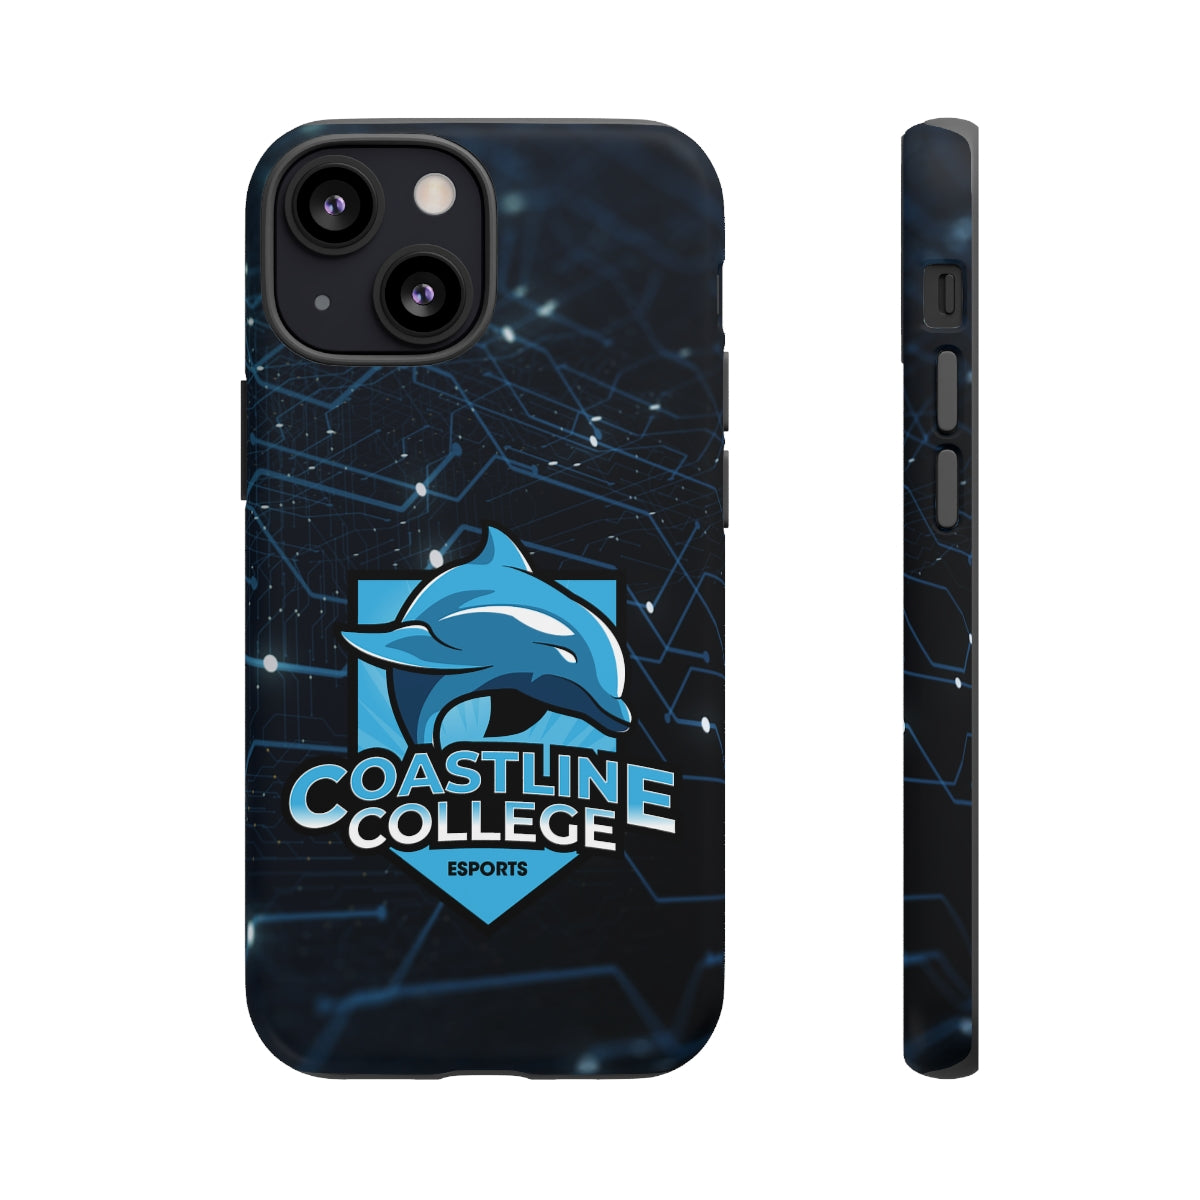 Coastline Esports Cellphone Tough Cases